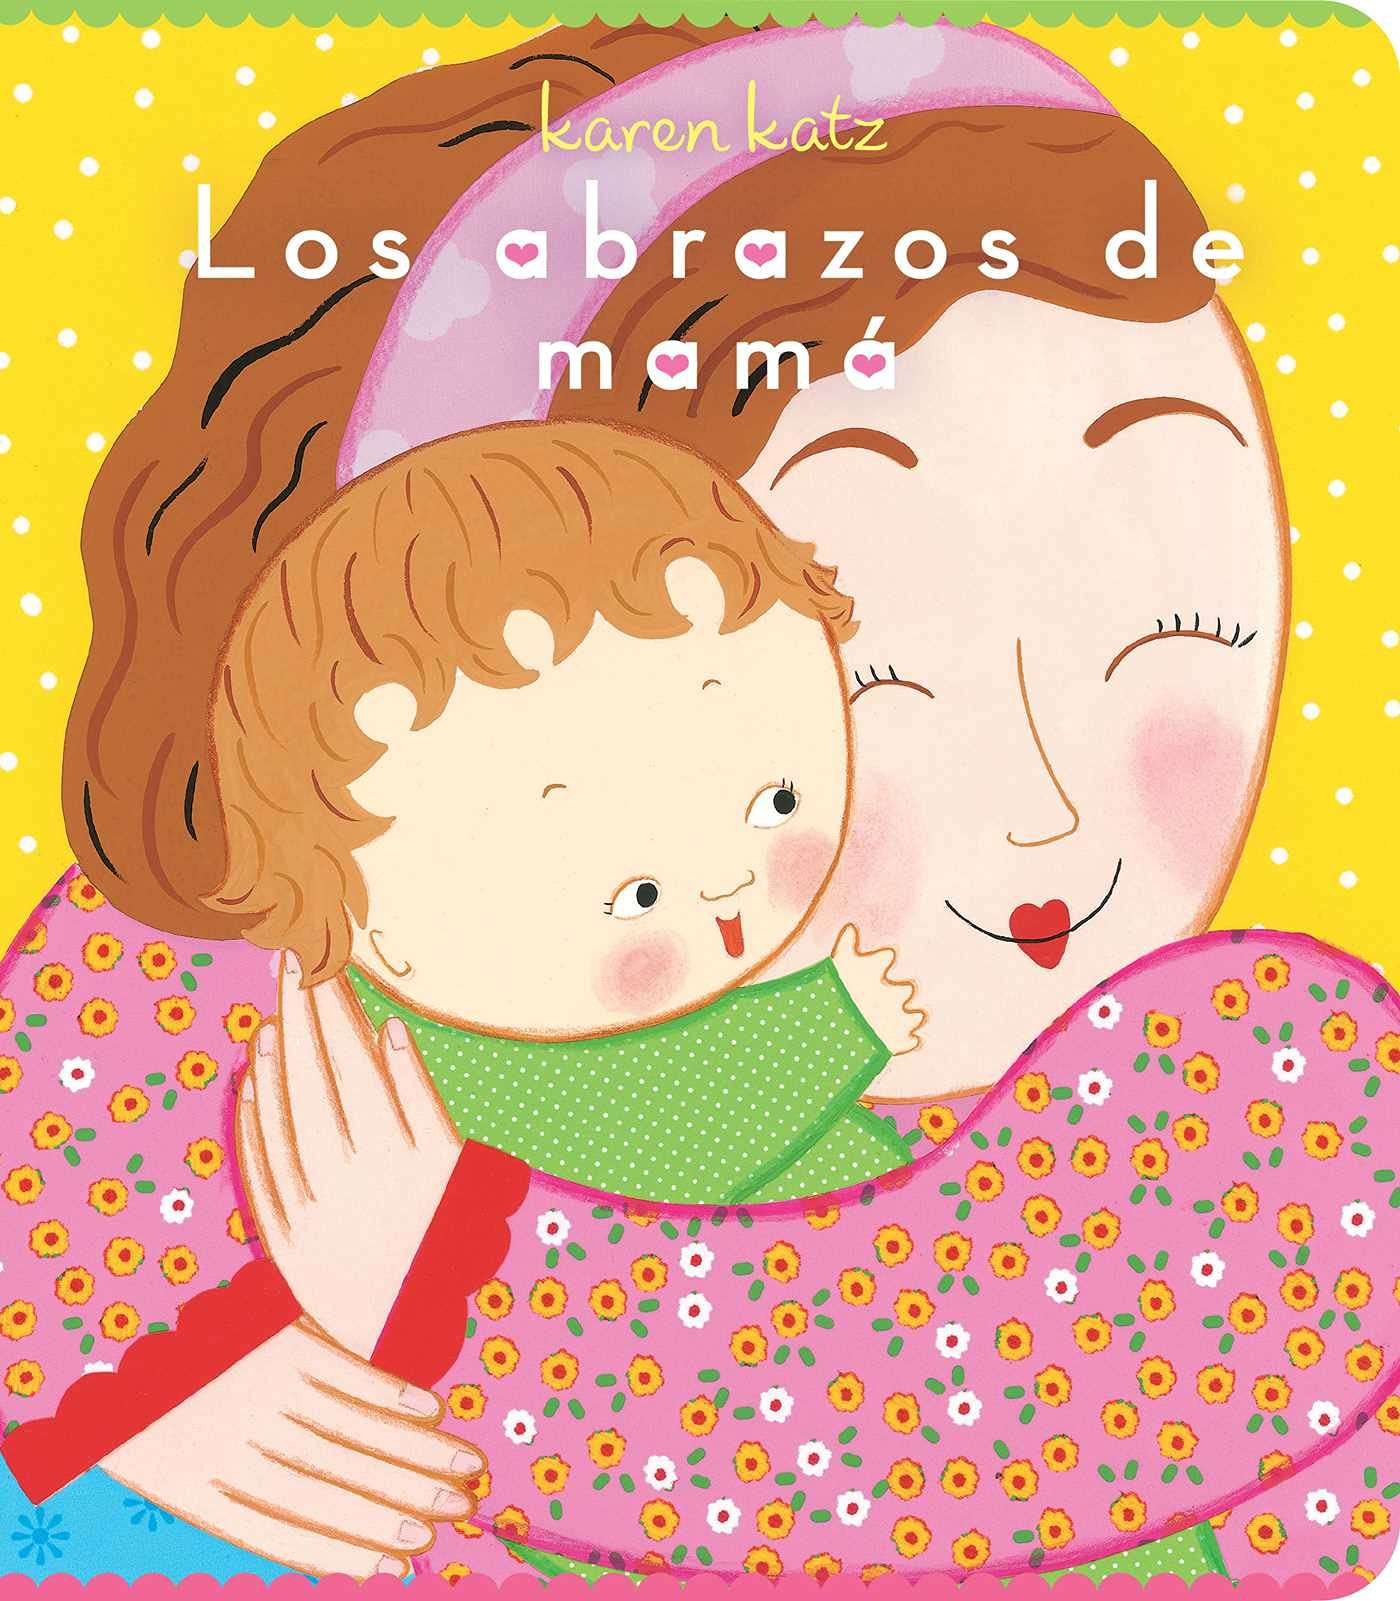 Image for "Los abrazos de mamá (Mommy Hugs)"